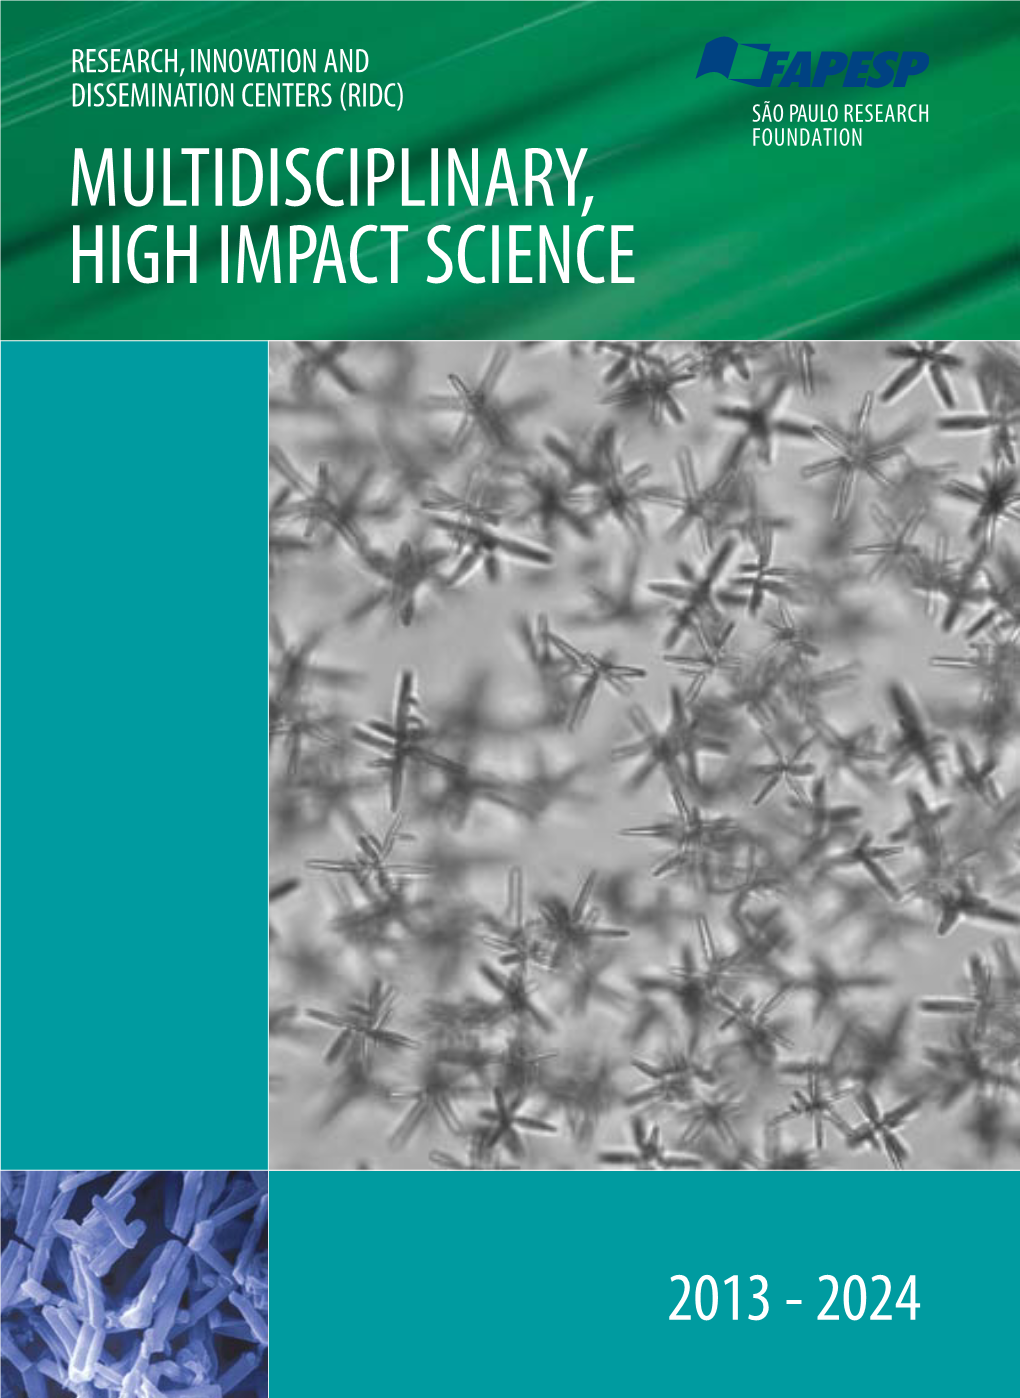 (RIDC): Multidisciplinary, High Impact Science